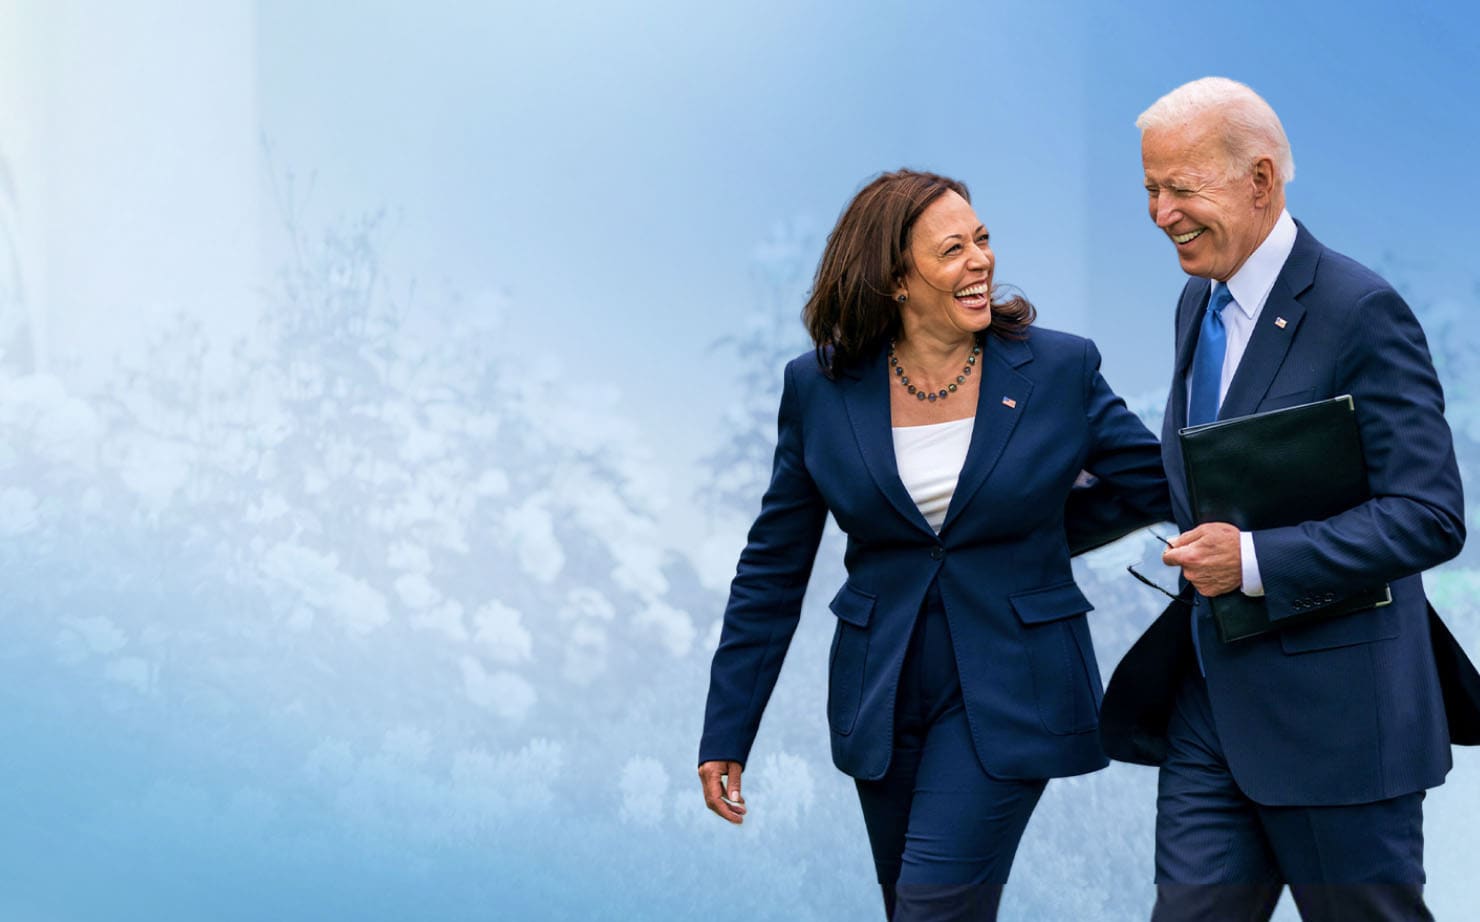 President Biden and Vice President Harris walking and talking